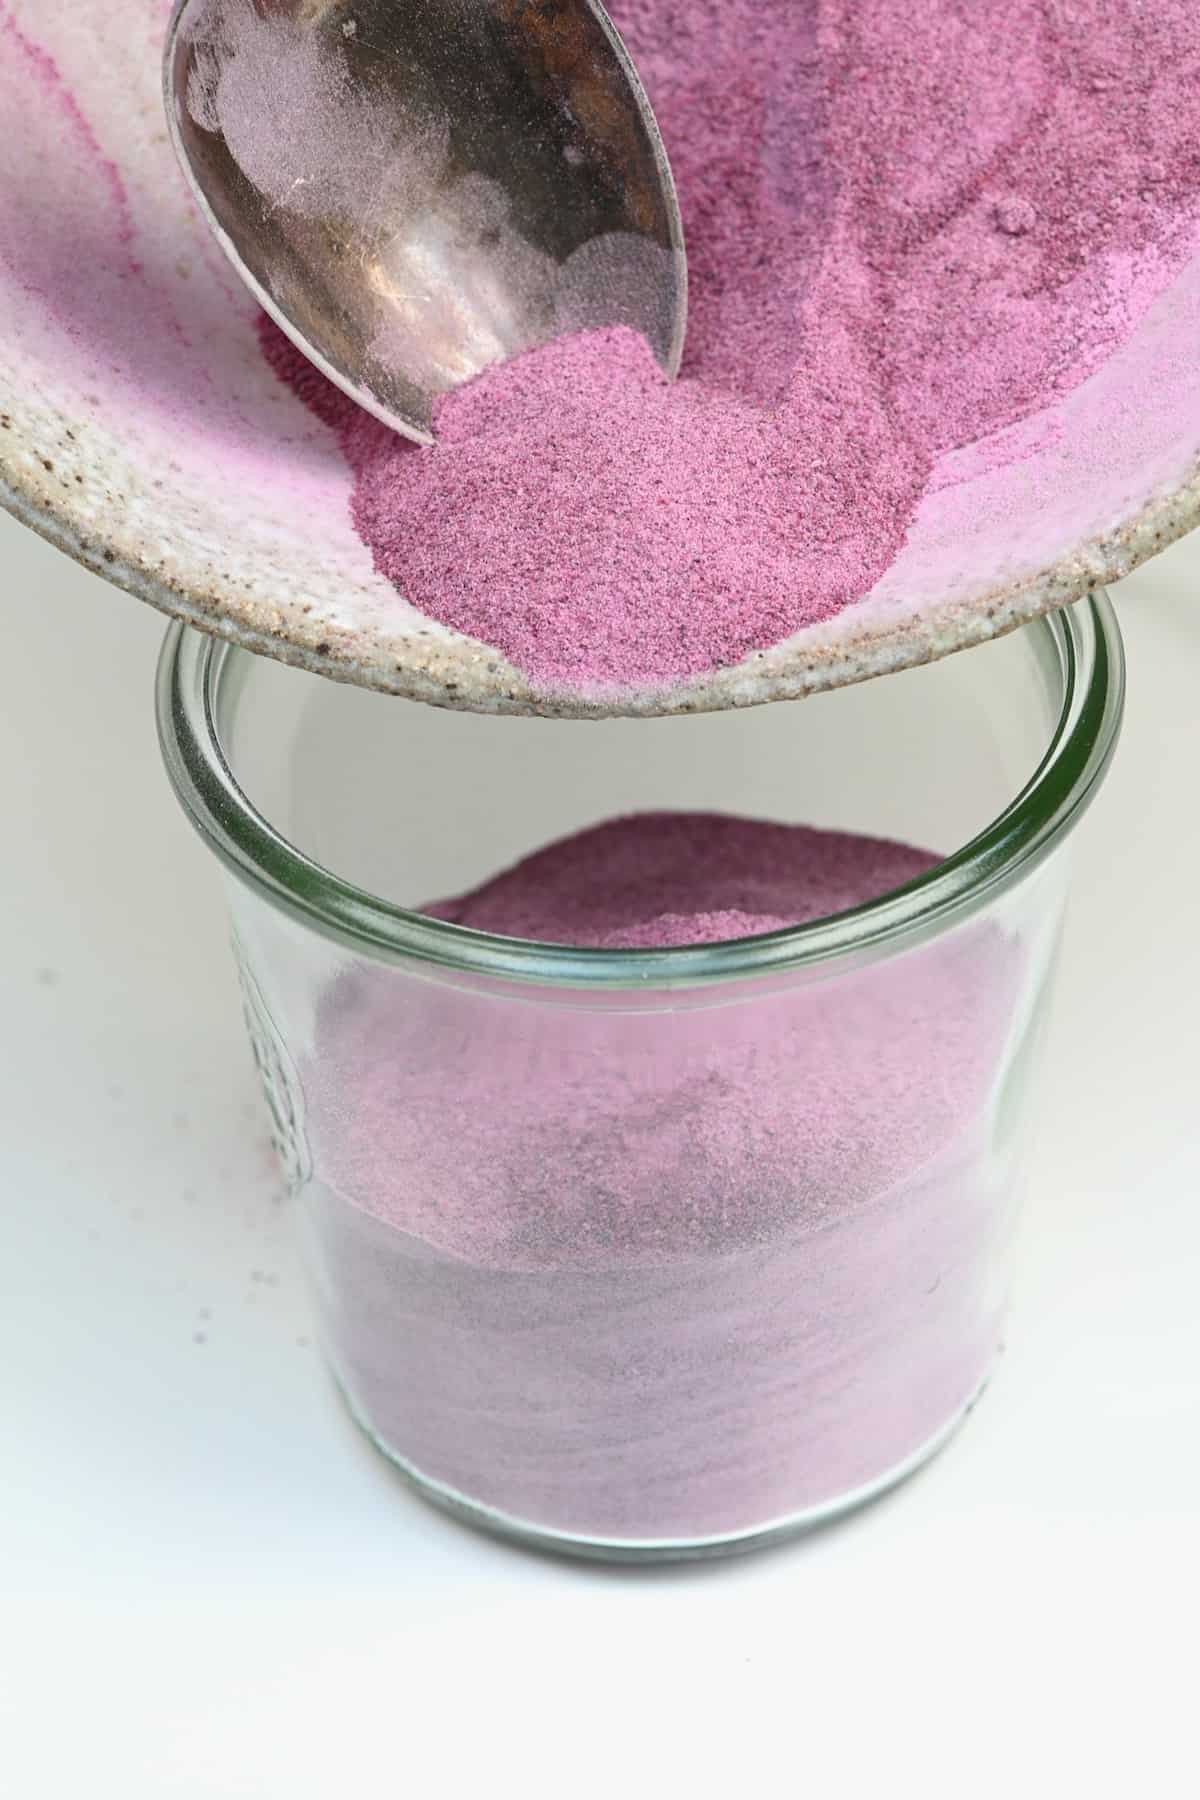 Transferring purple potato powder to a jar